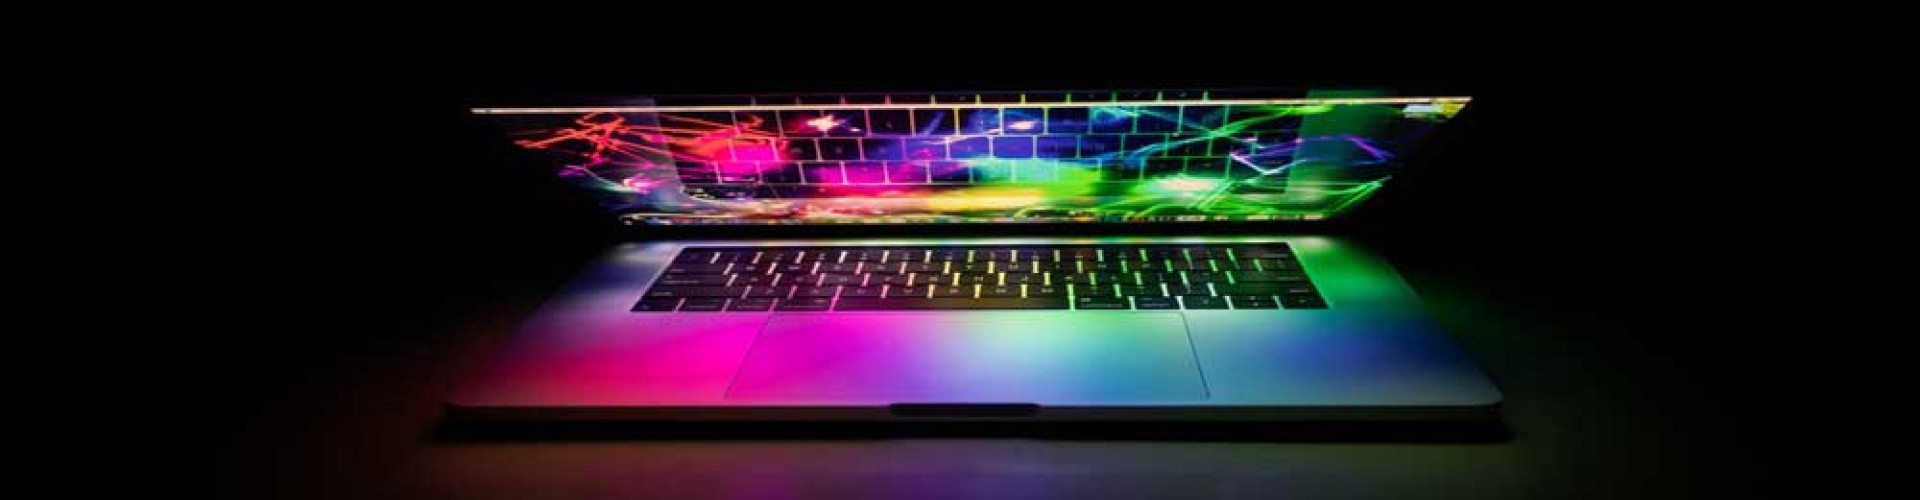 laptop with colour lights|laptop with colour screen|laptop with colour lights